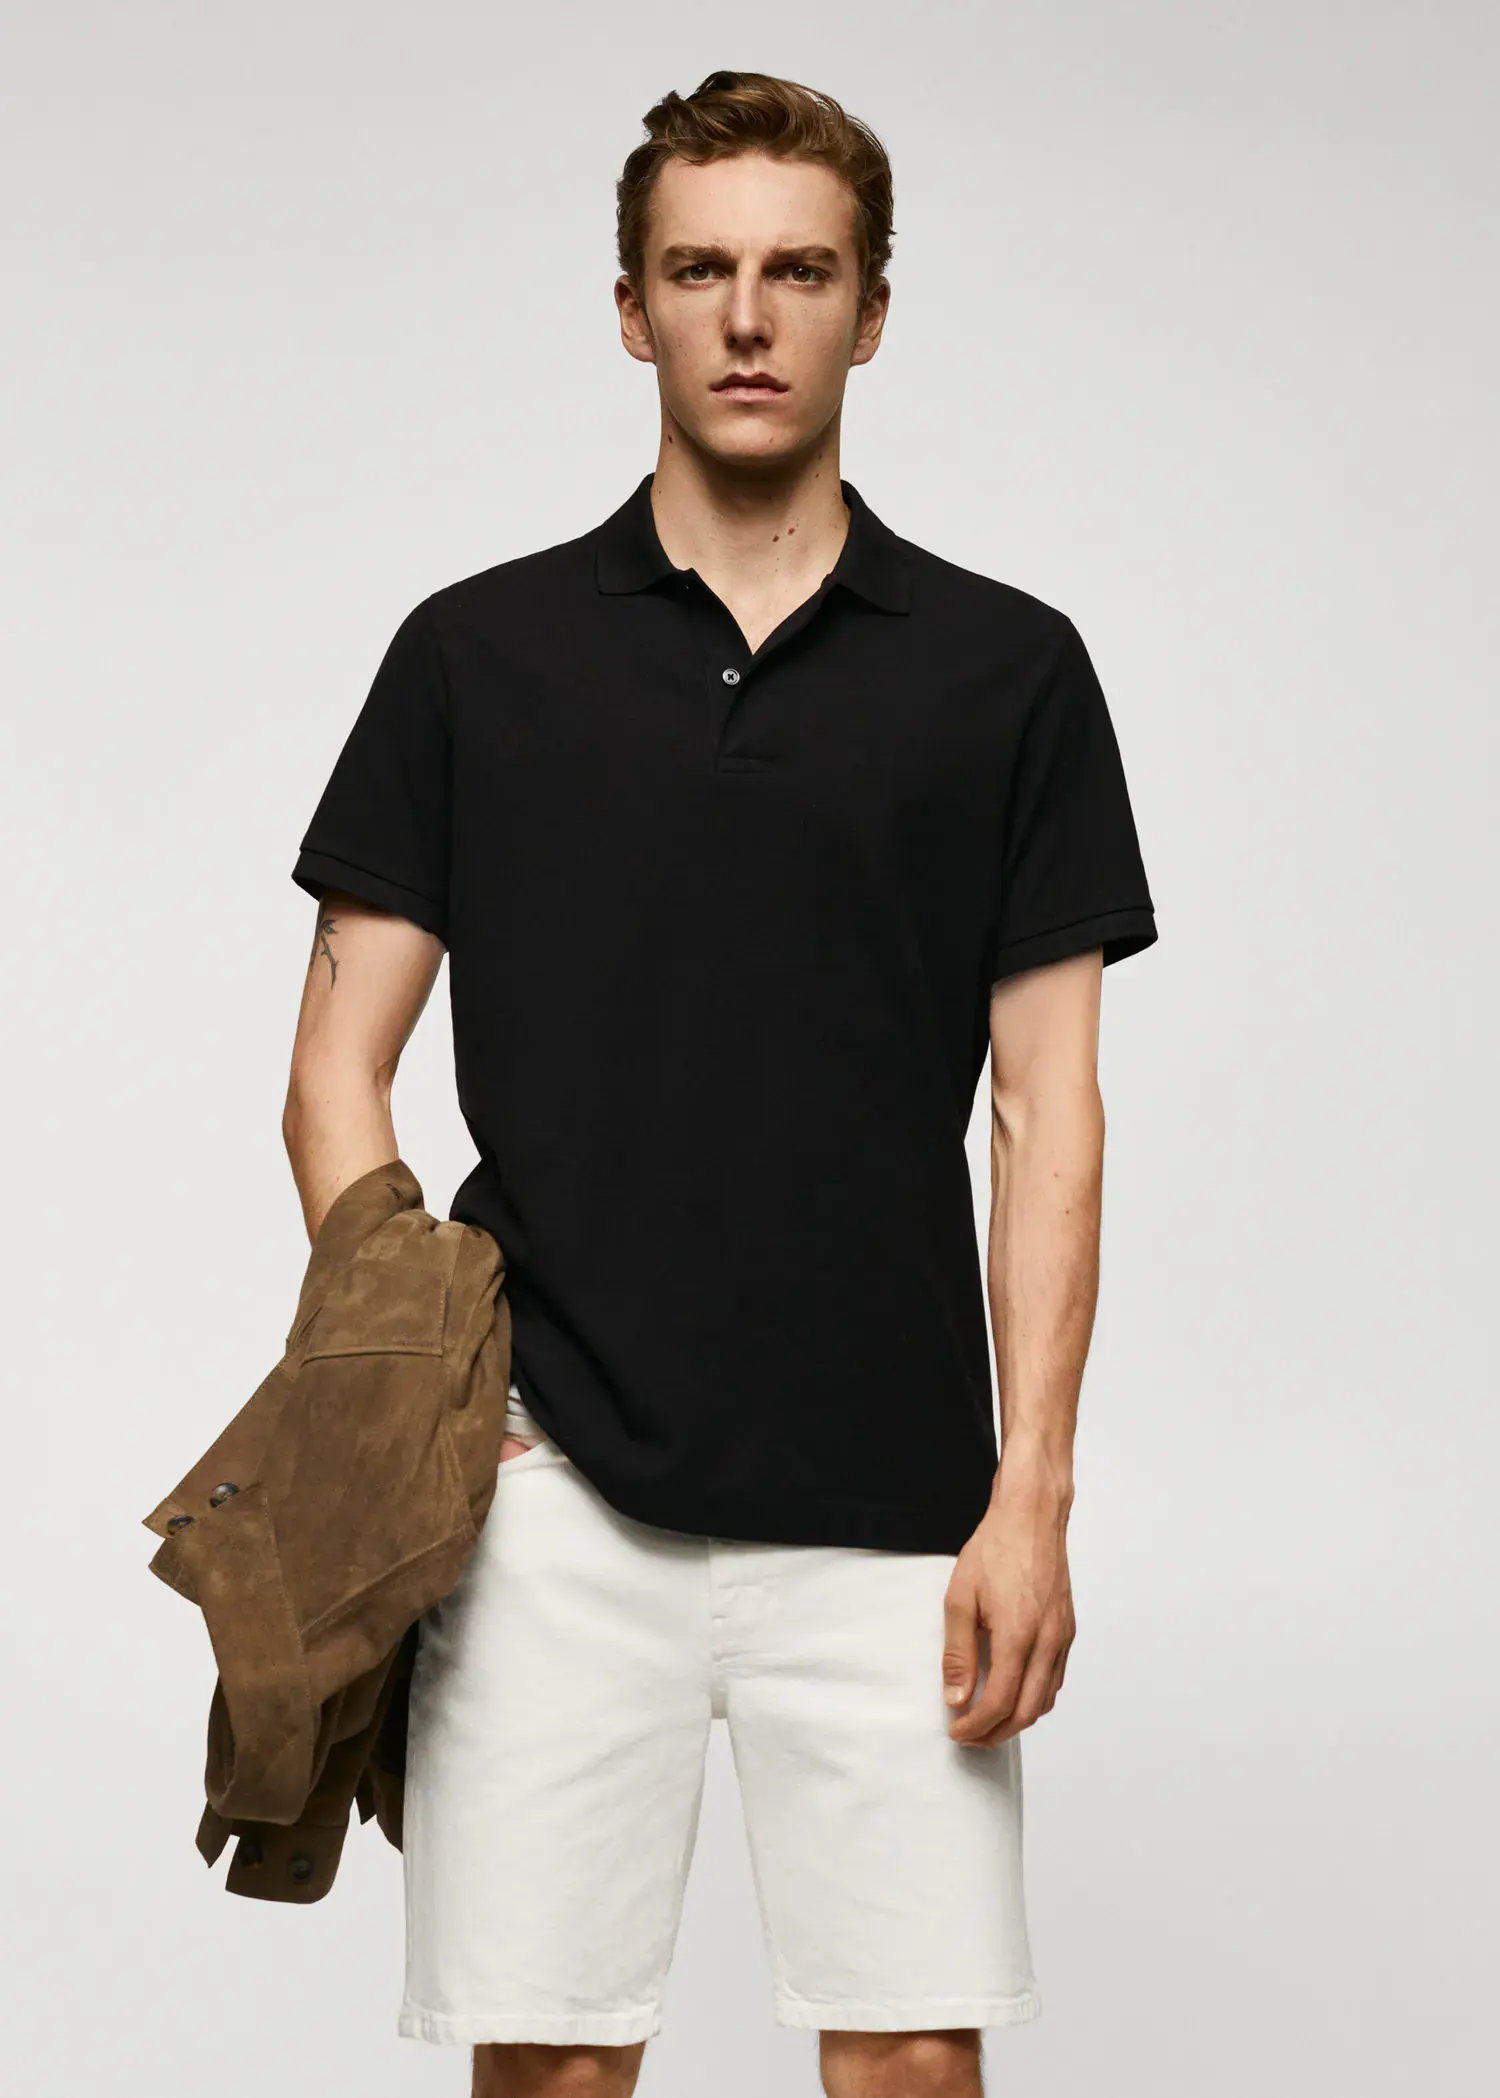 Mango 100% cotton pique polo shirt. a man in a black shirt holding a brown jacket. 